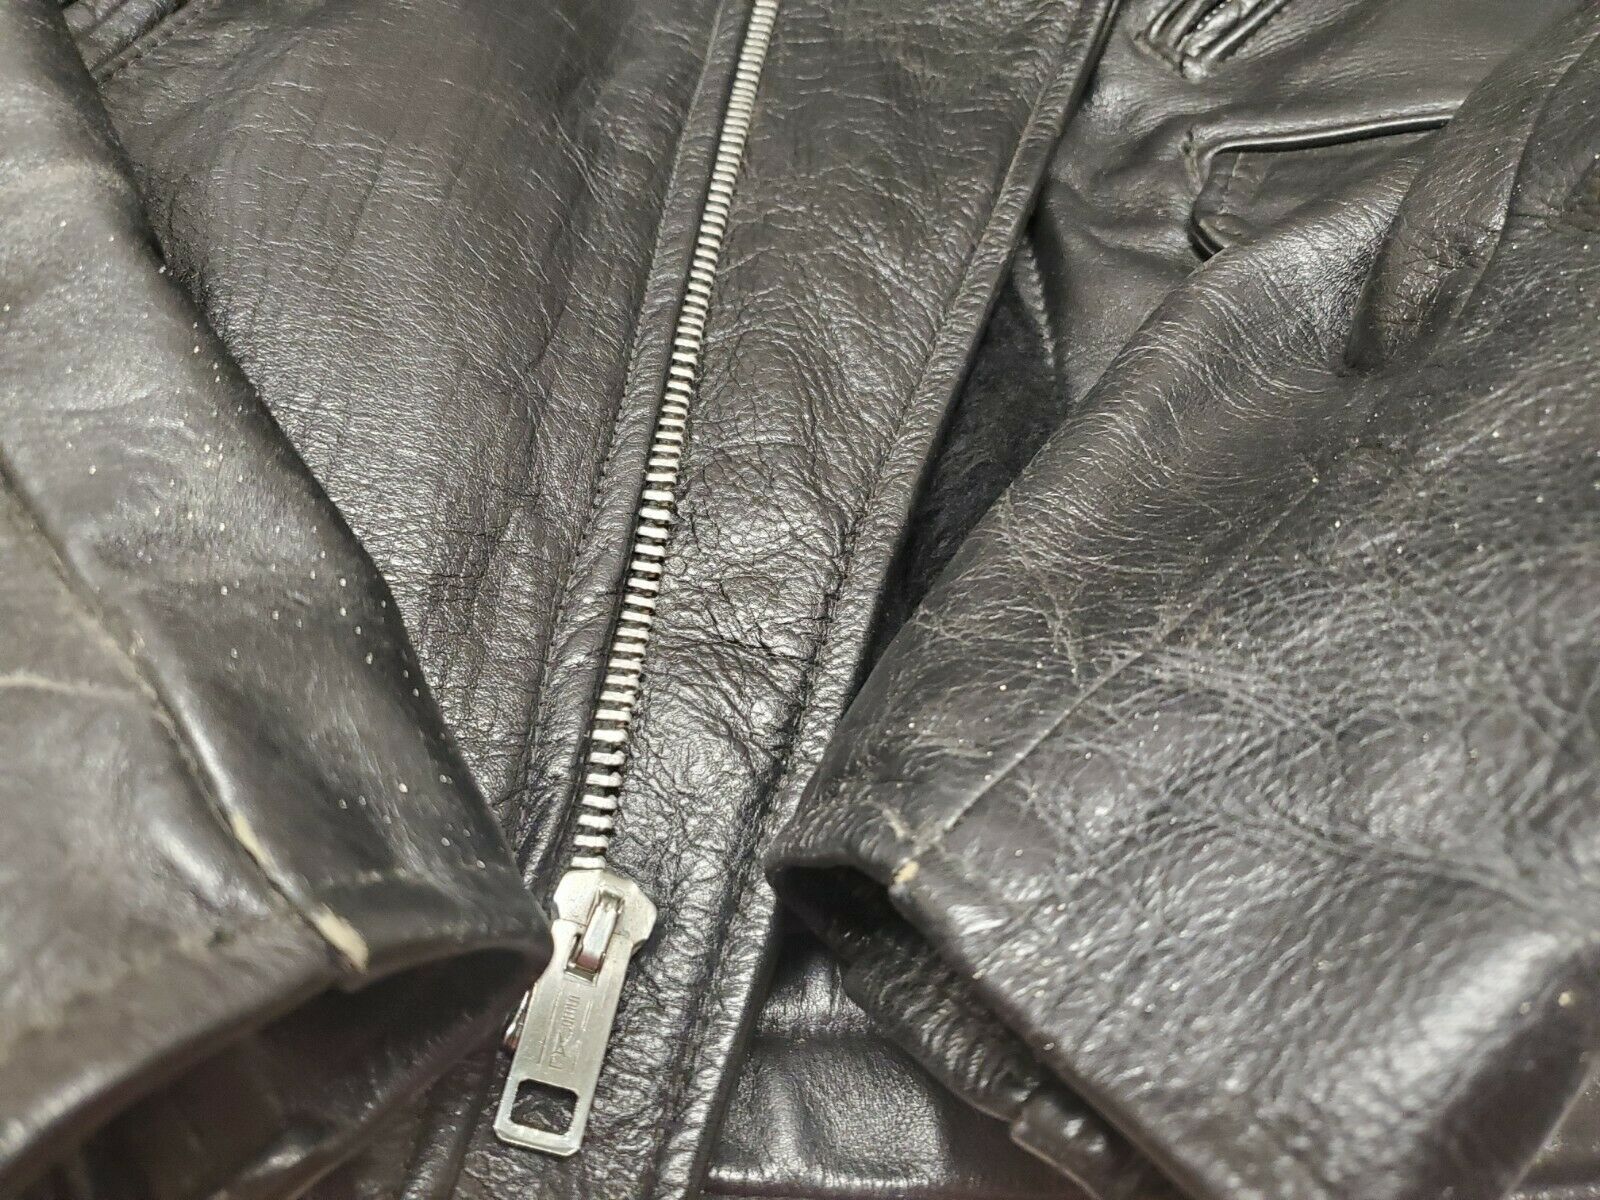 Paint splatters on leather jackets | The Fedora Lounge